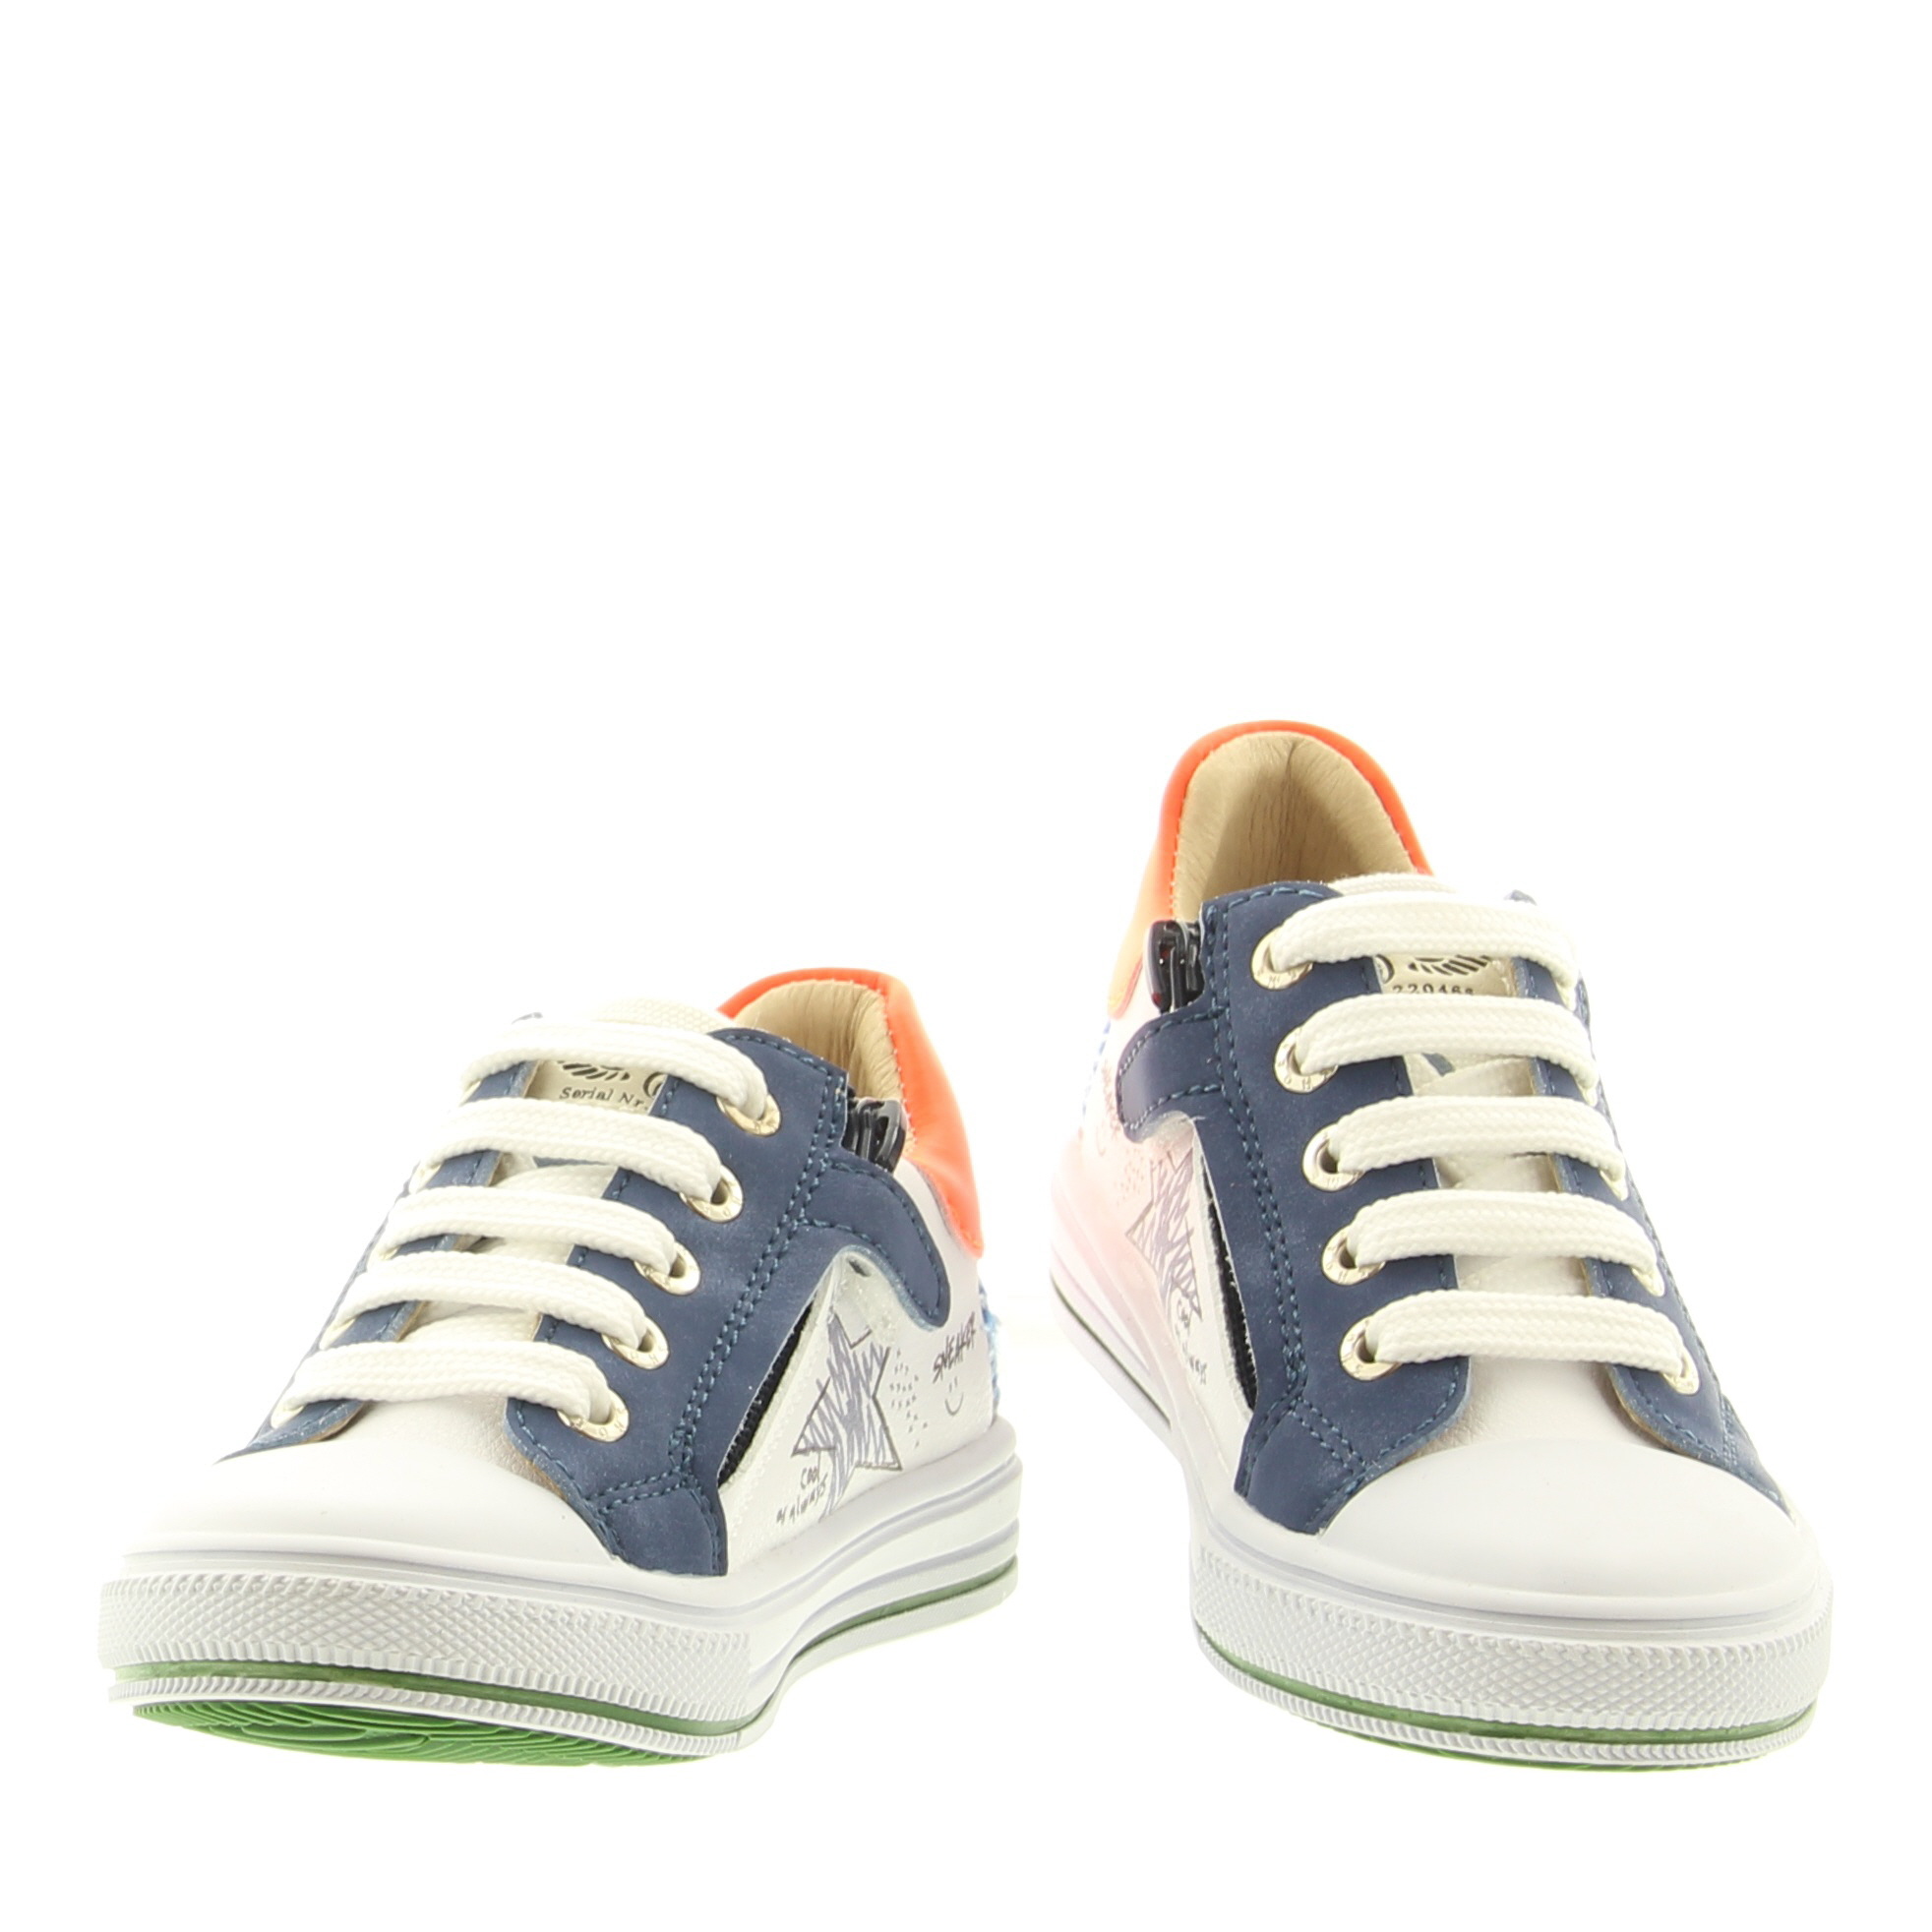 ShoesMe ON24S270-C White Blue Orange